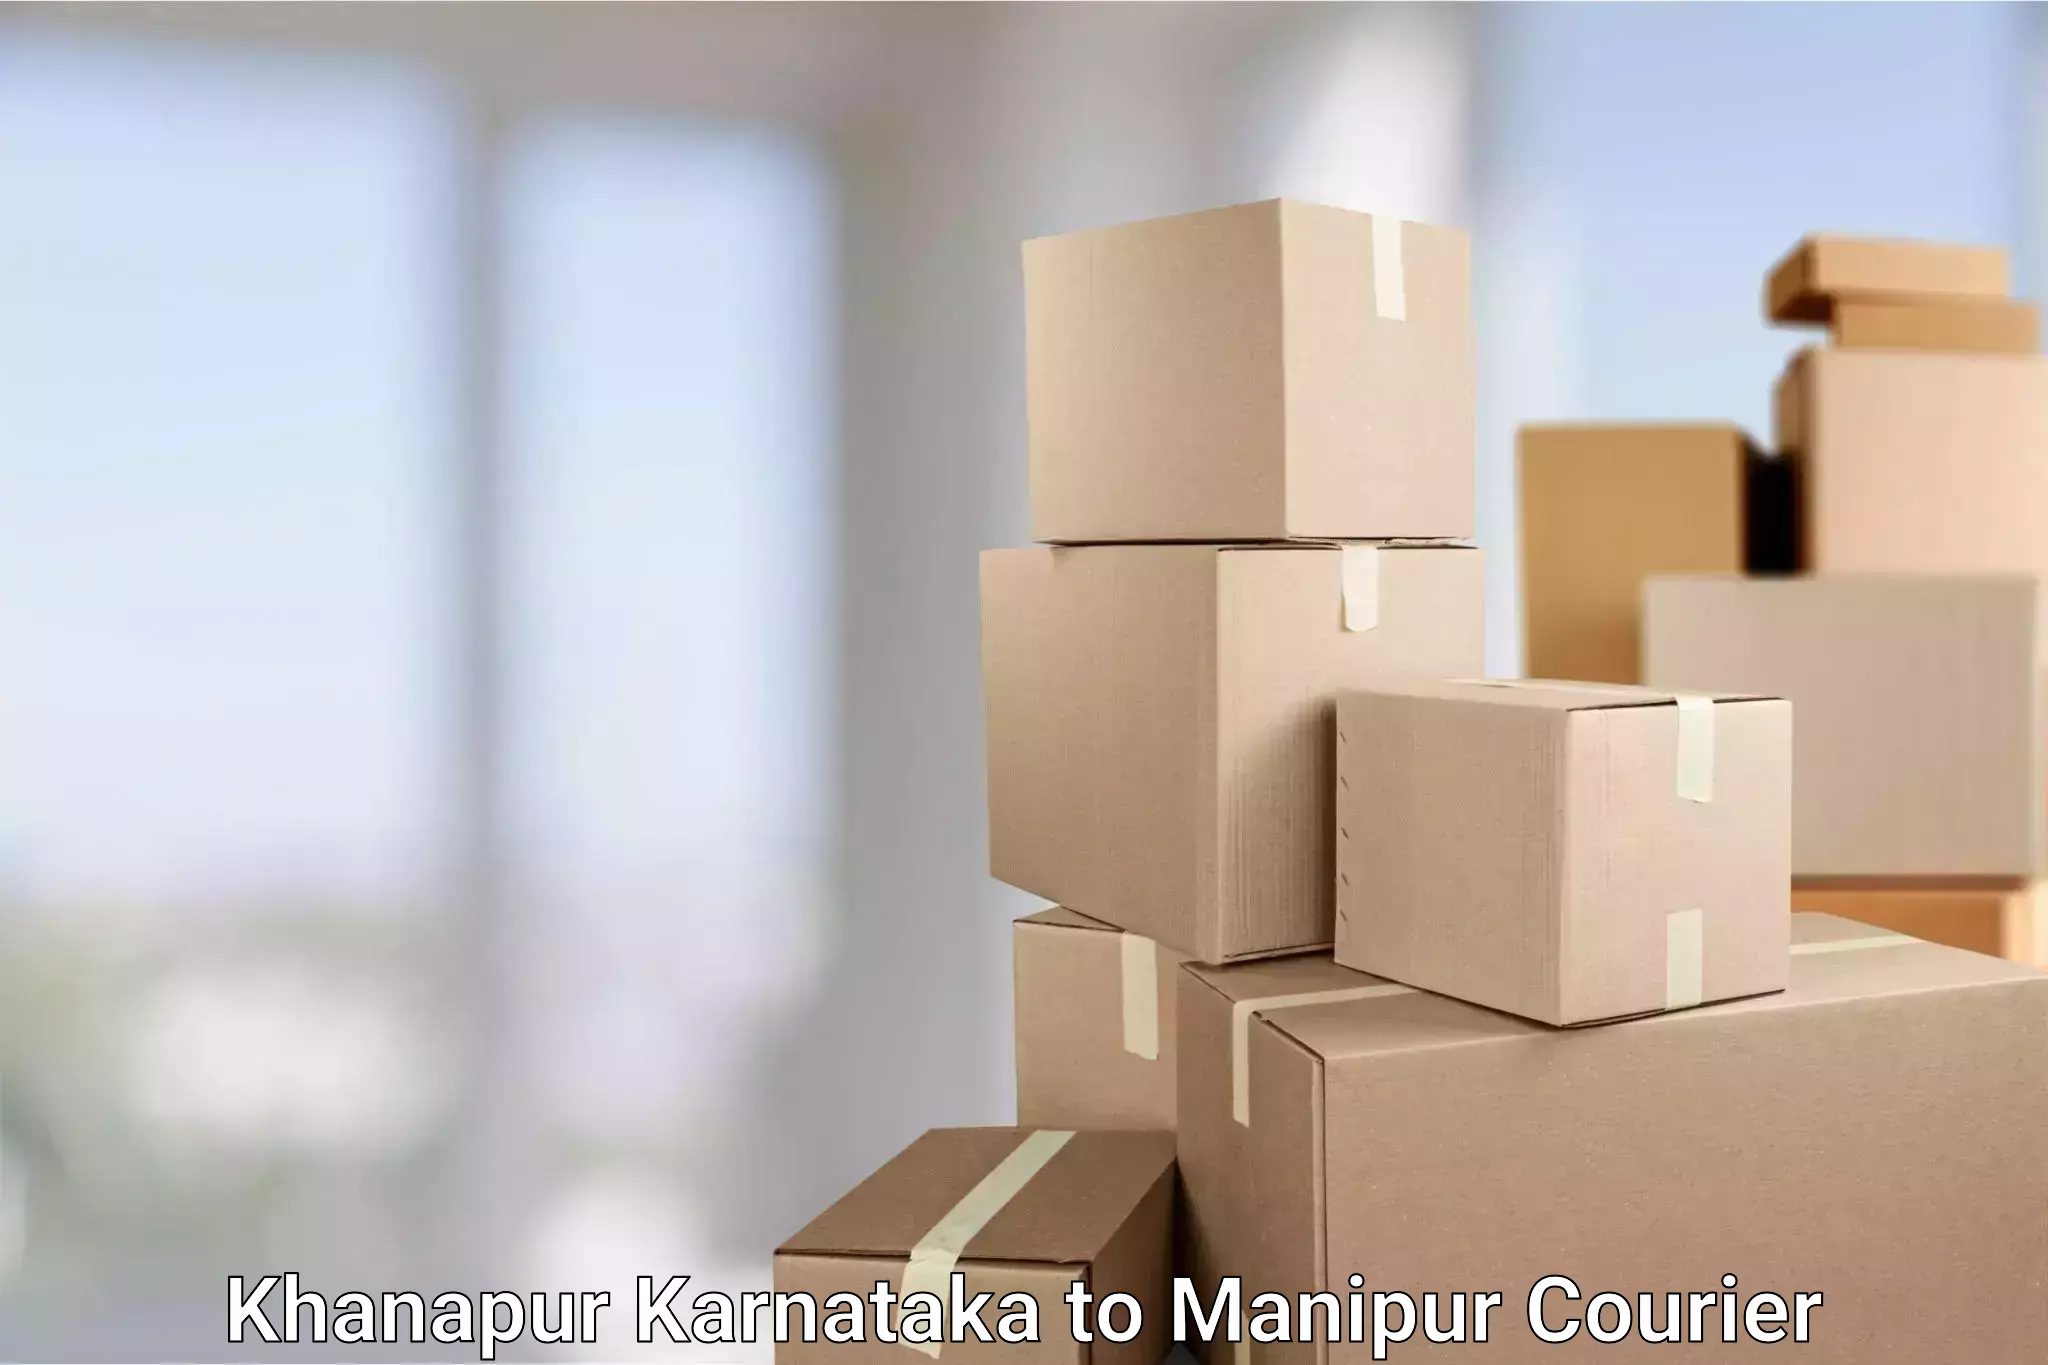 Courier service partnerships Khanapur Karnataka to Chandel